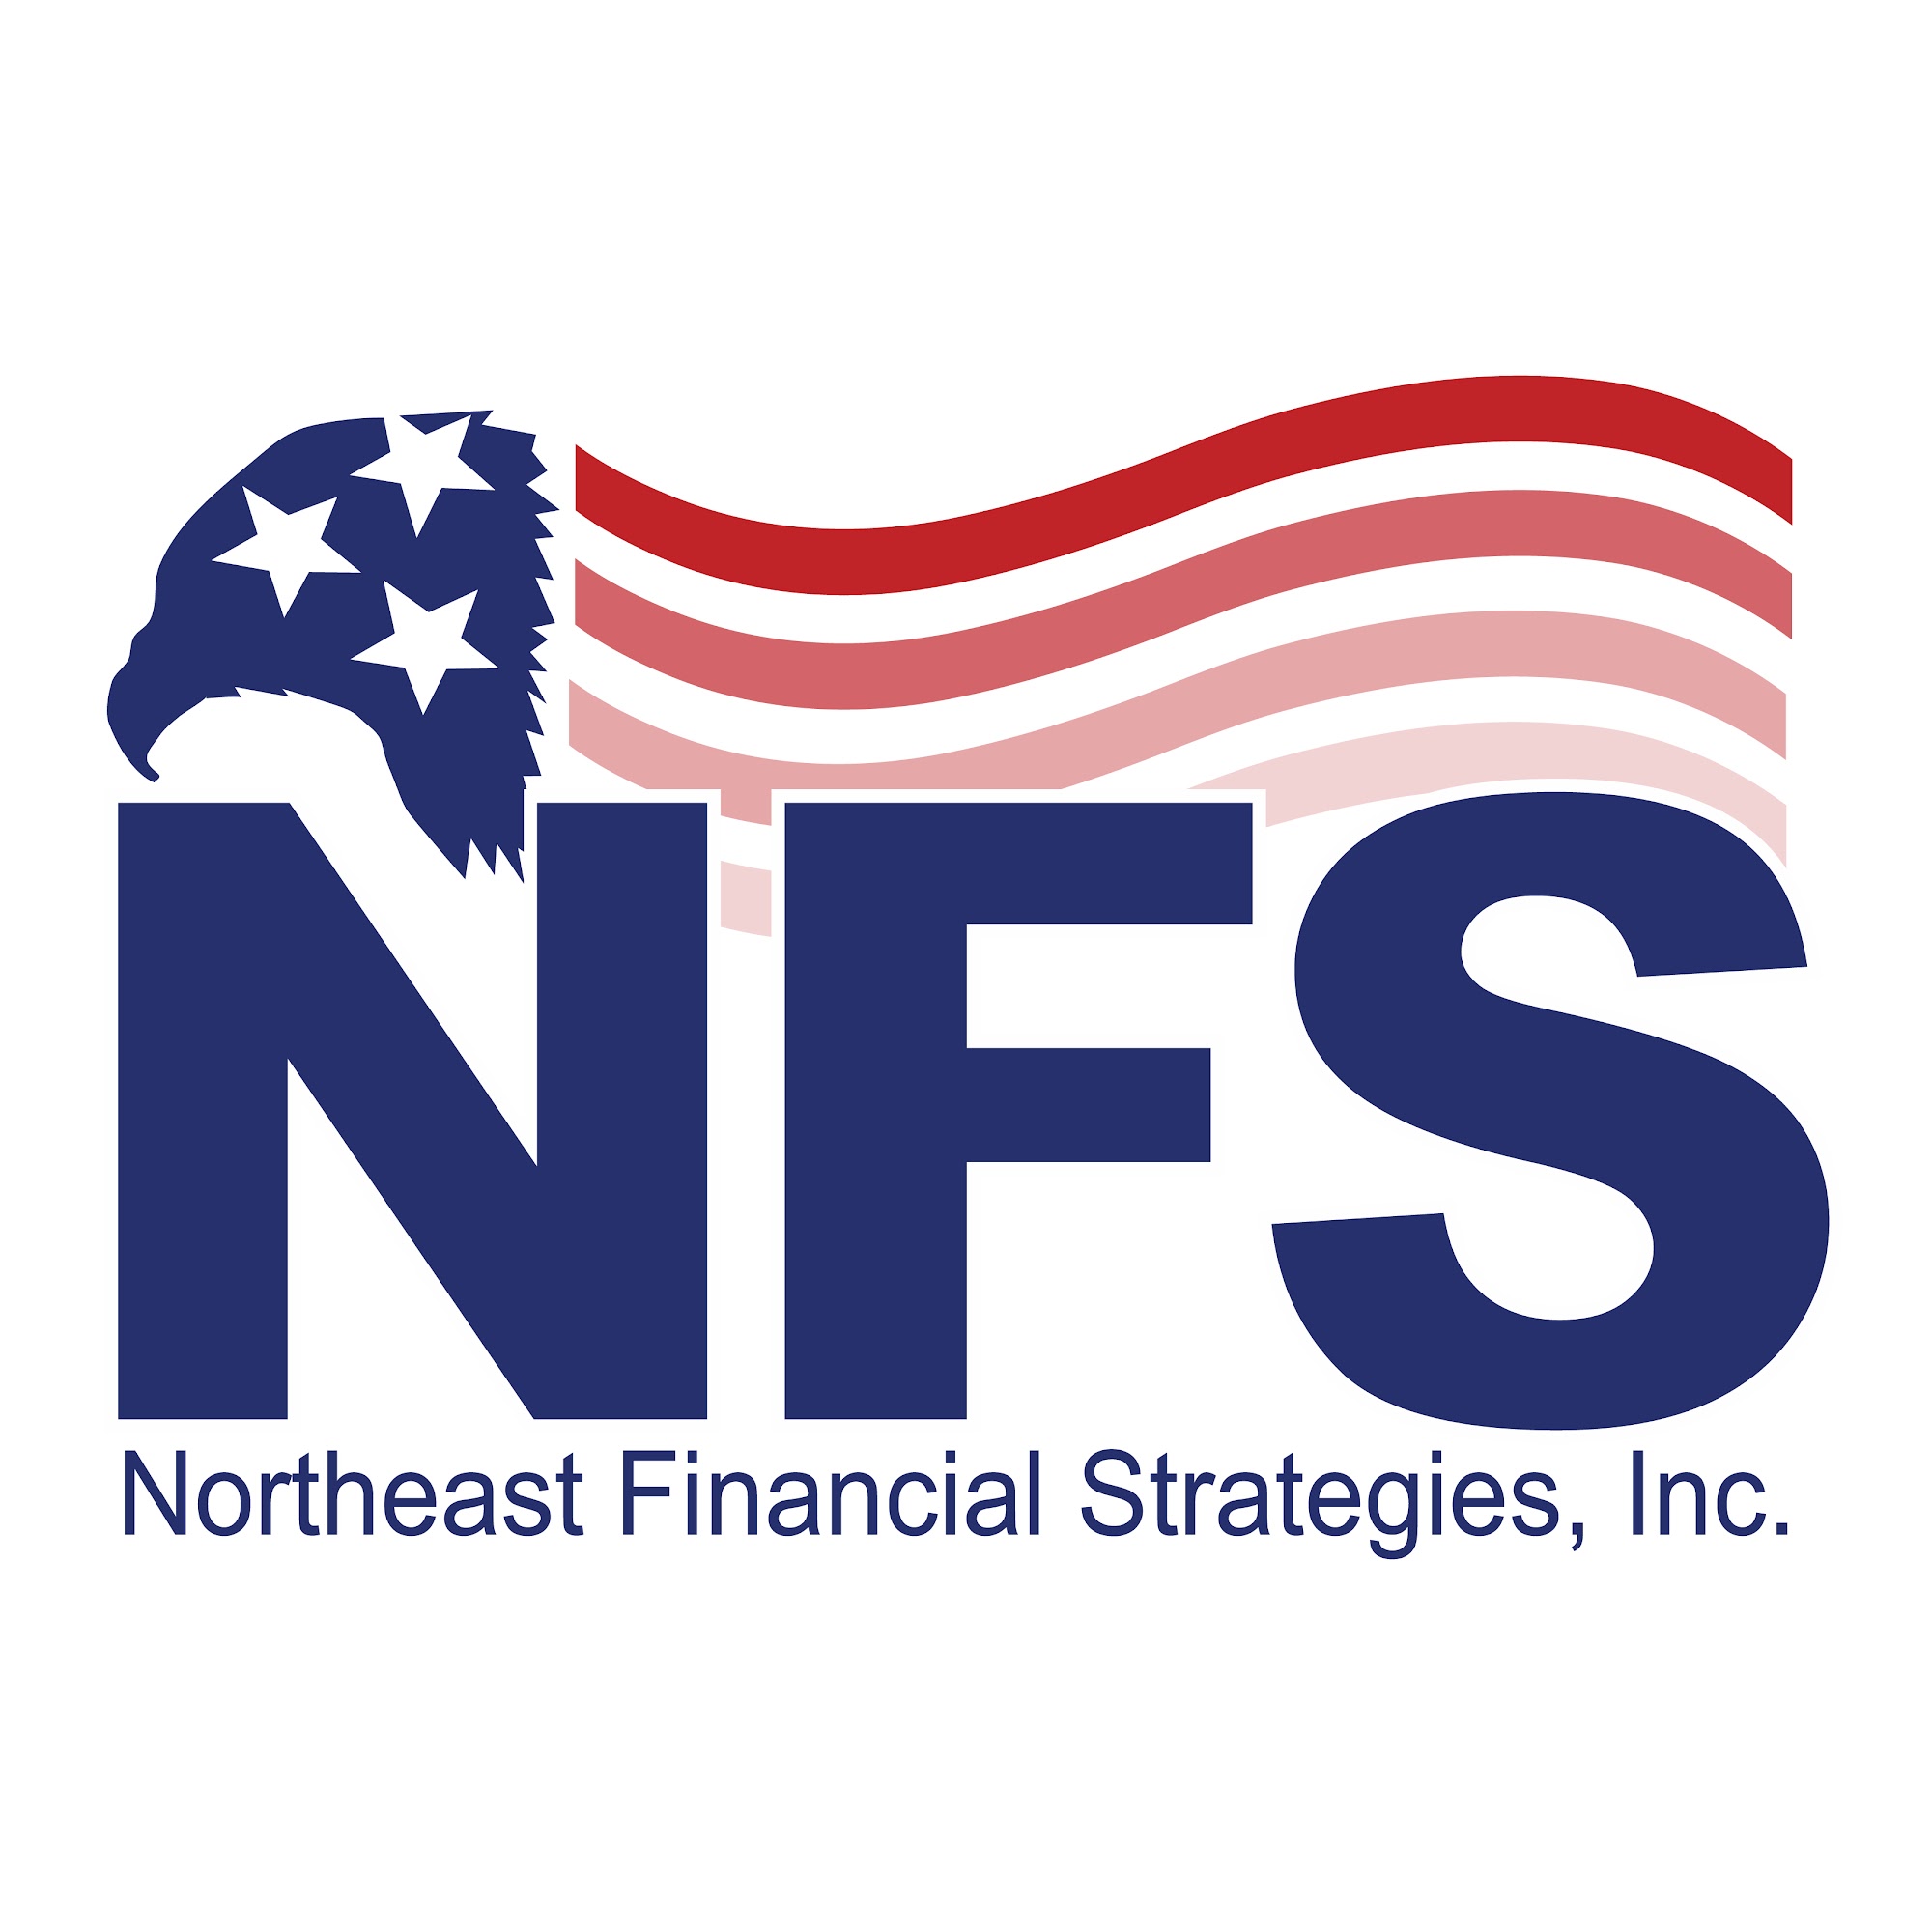 Northeast Financial Strategies, Inc. 667 South St, Wrentham Massachusetts 02093